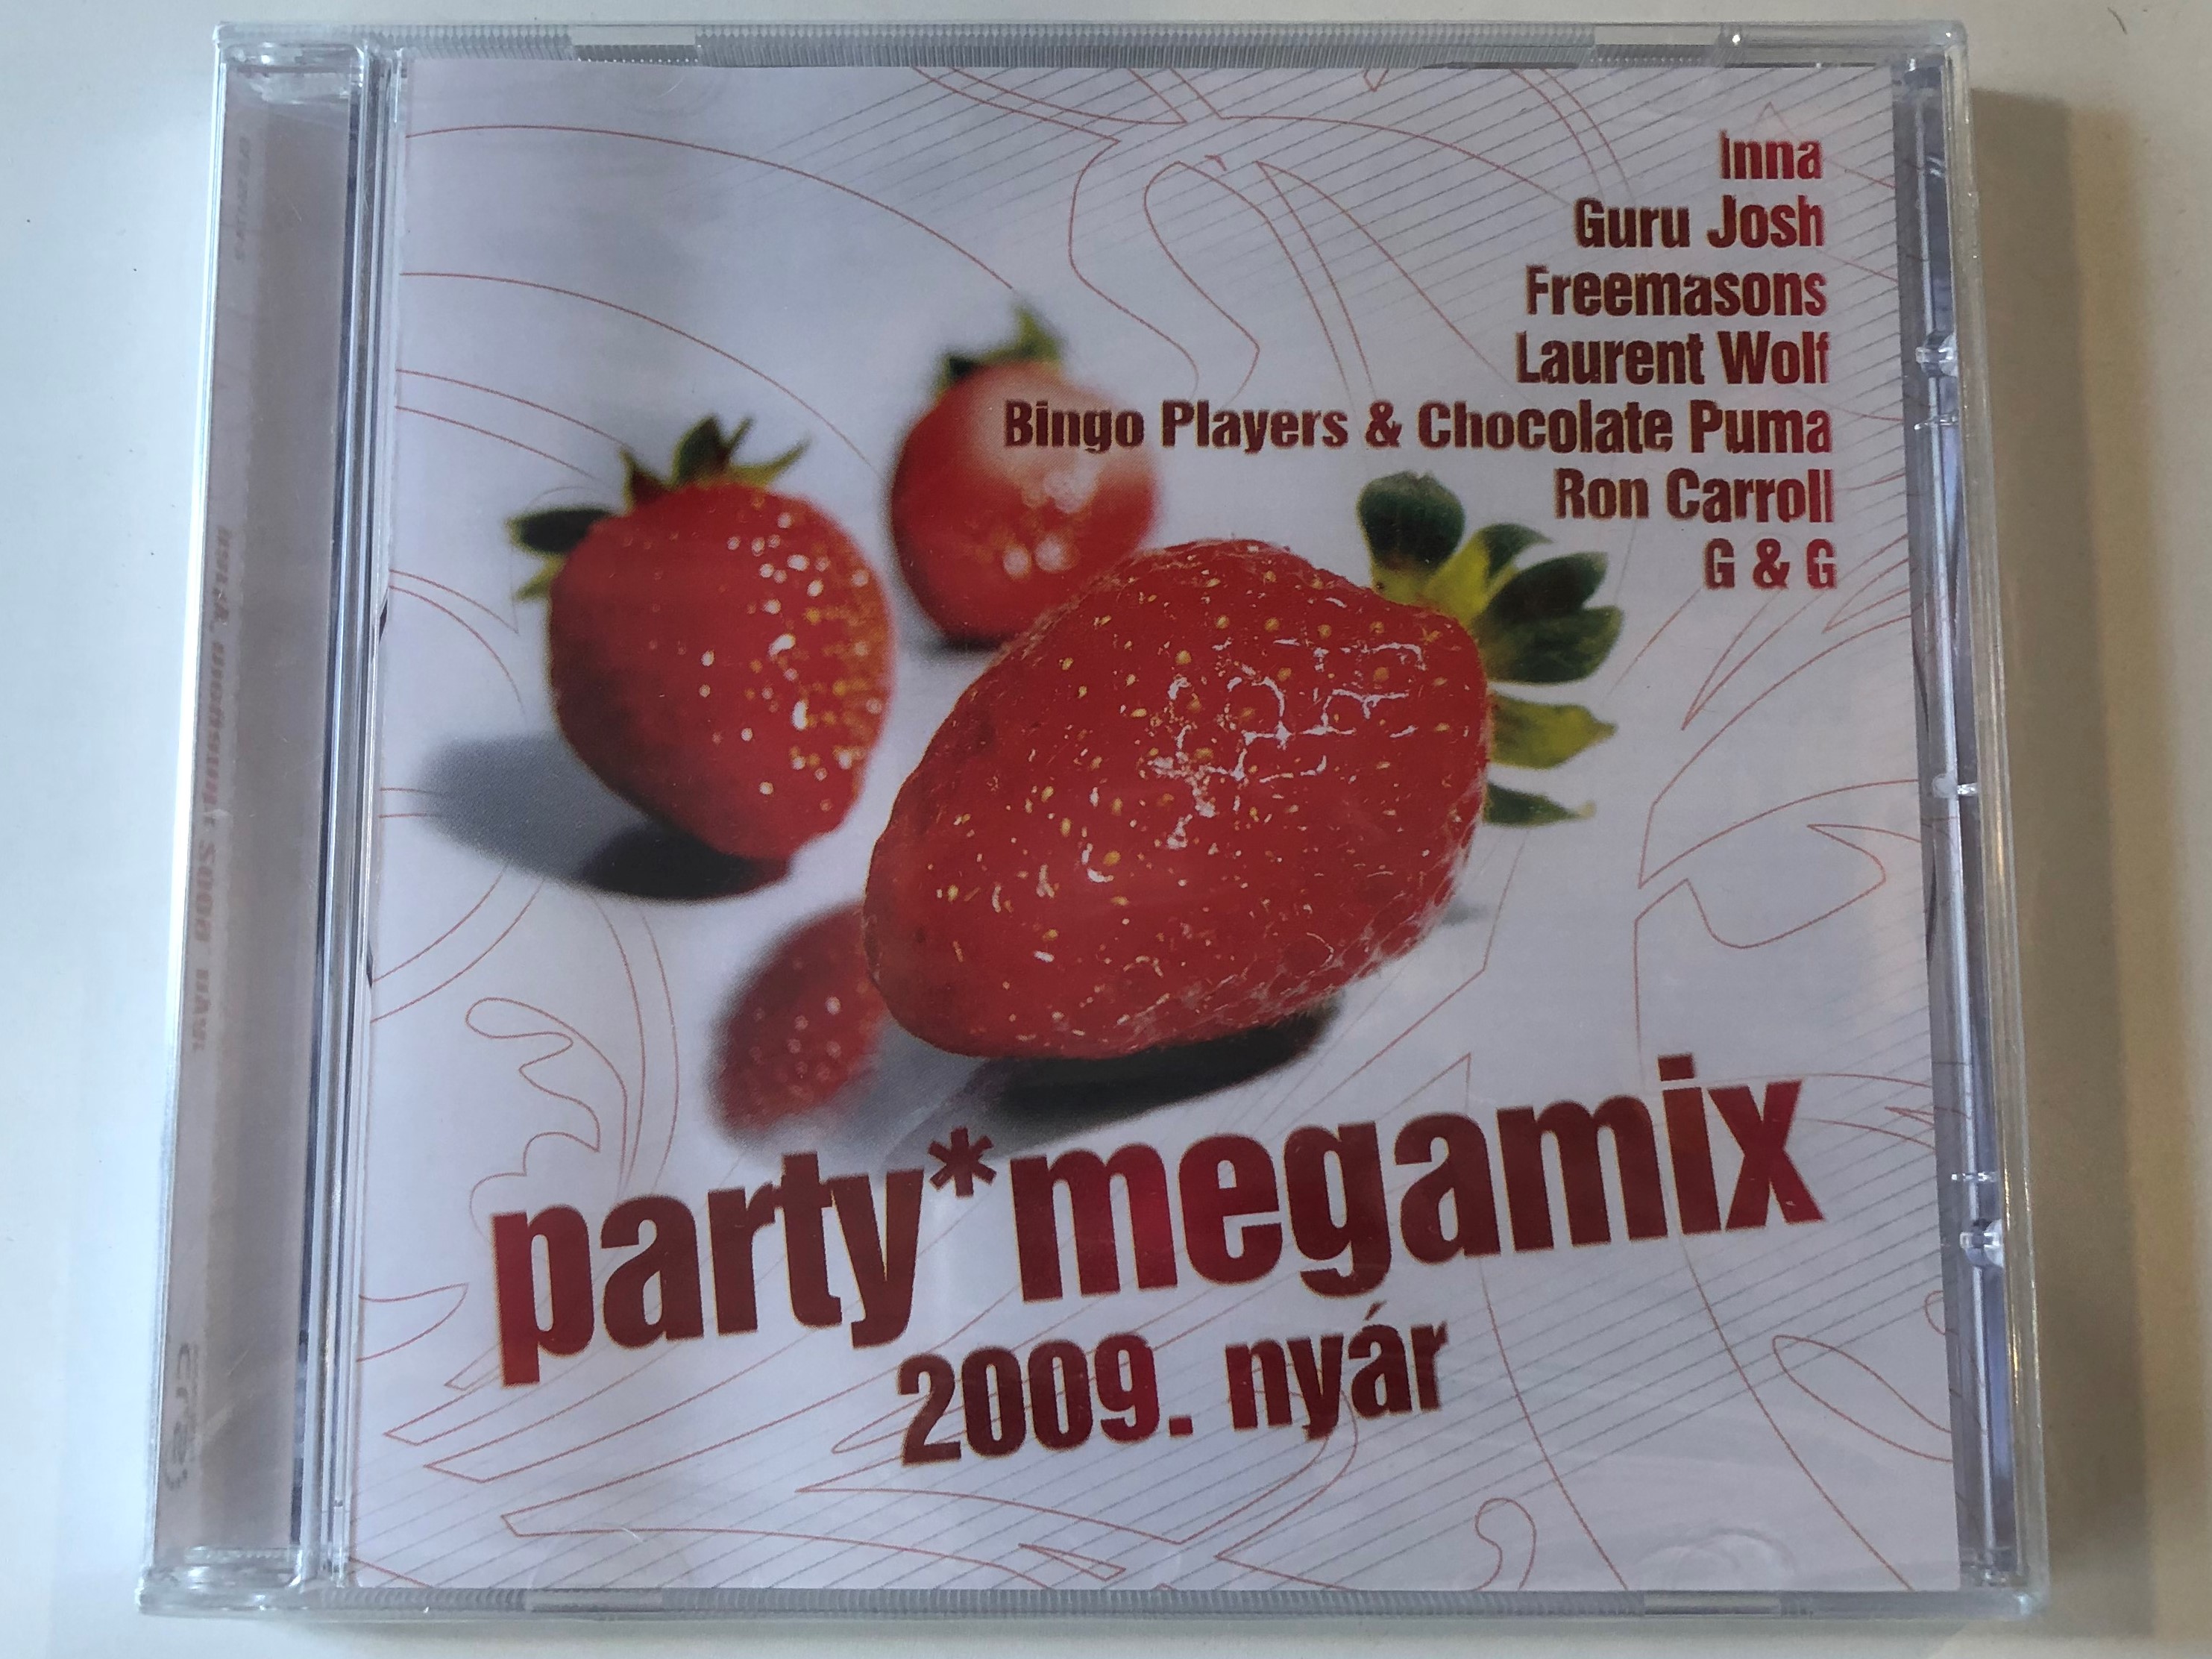 partymegamix-2009.-ny-r-inna-guru-josh-freemasons-laurent-wolf-bingo-players-chocolate-puma-ron-carroll-g-g-cls-audio-cd-2009-cls-sa174-2-1-.jpg